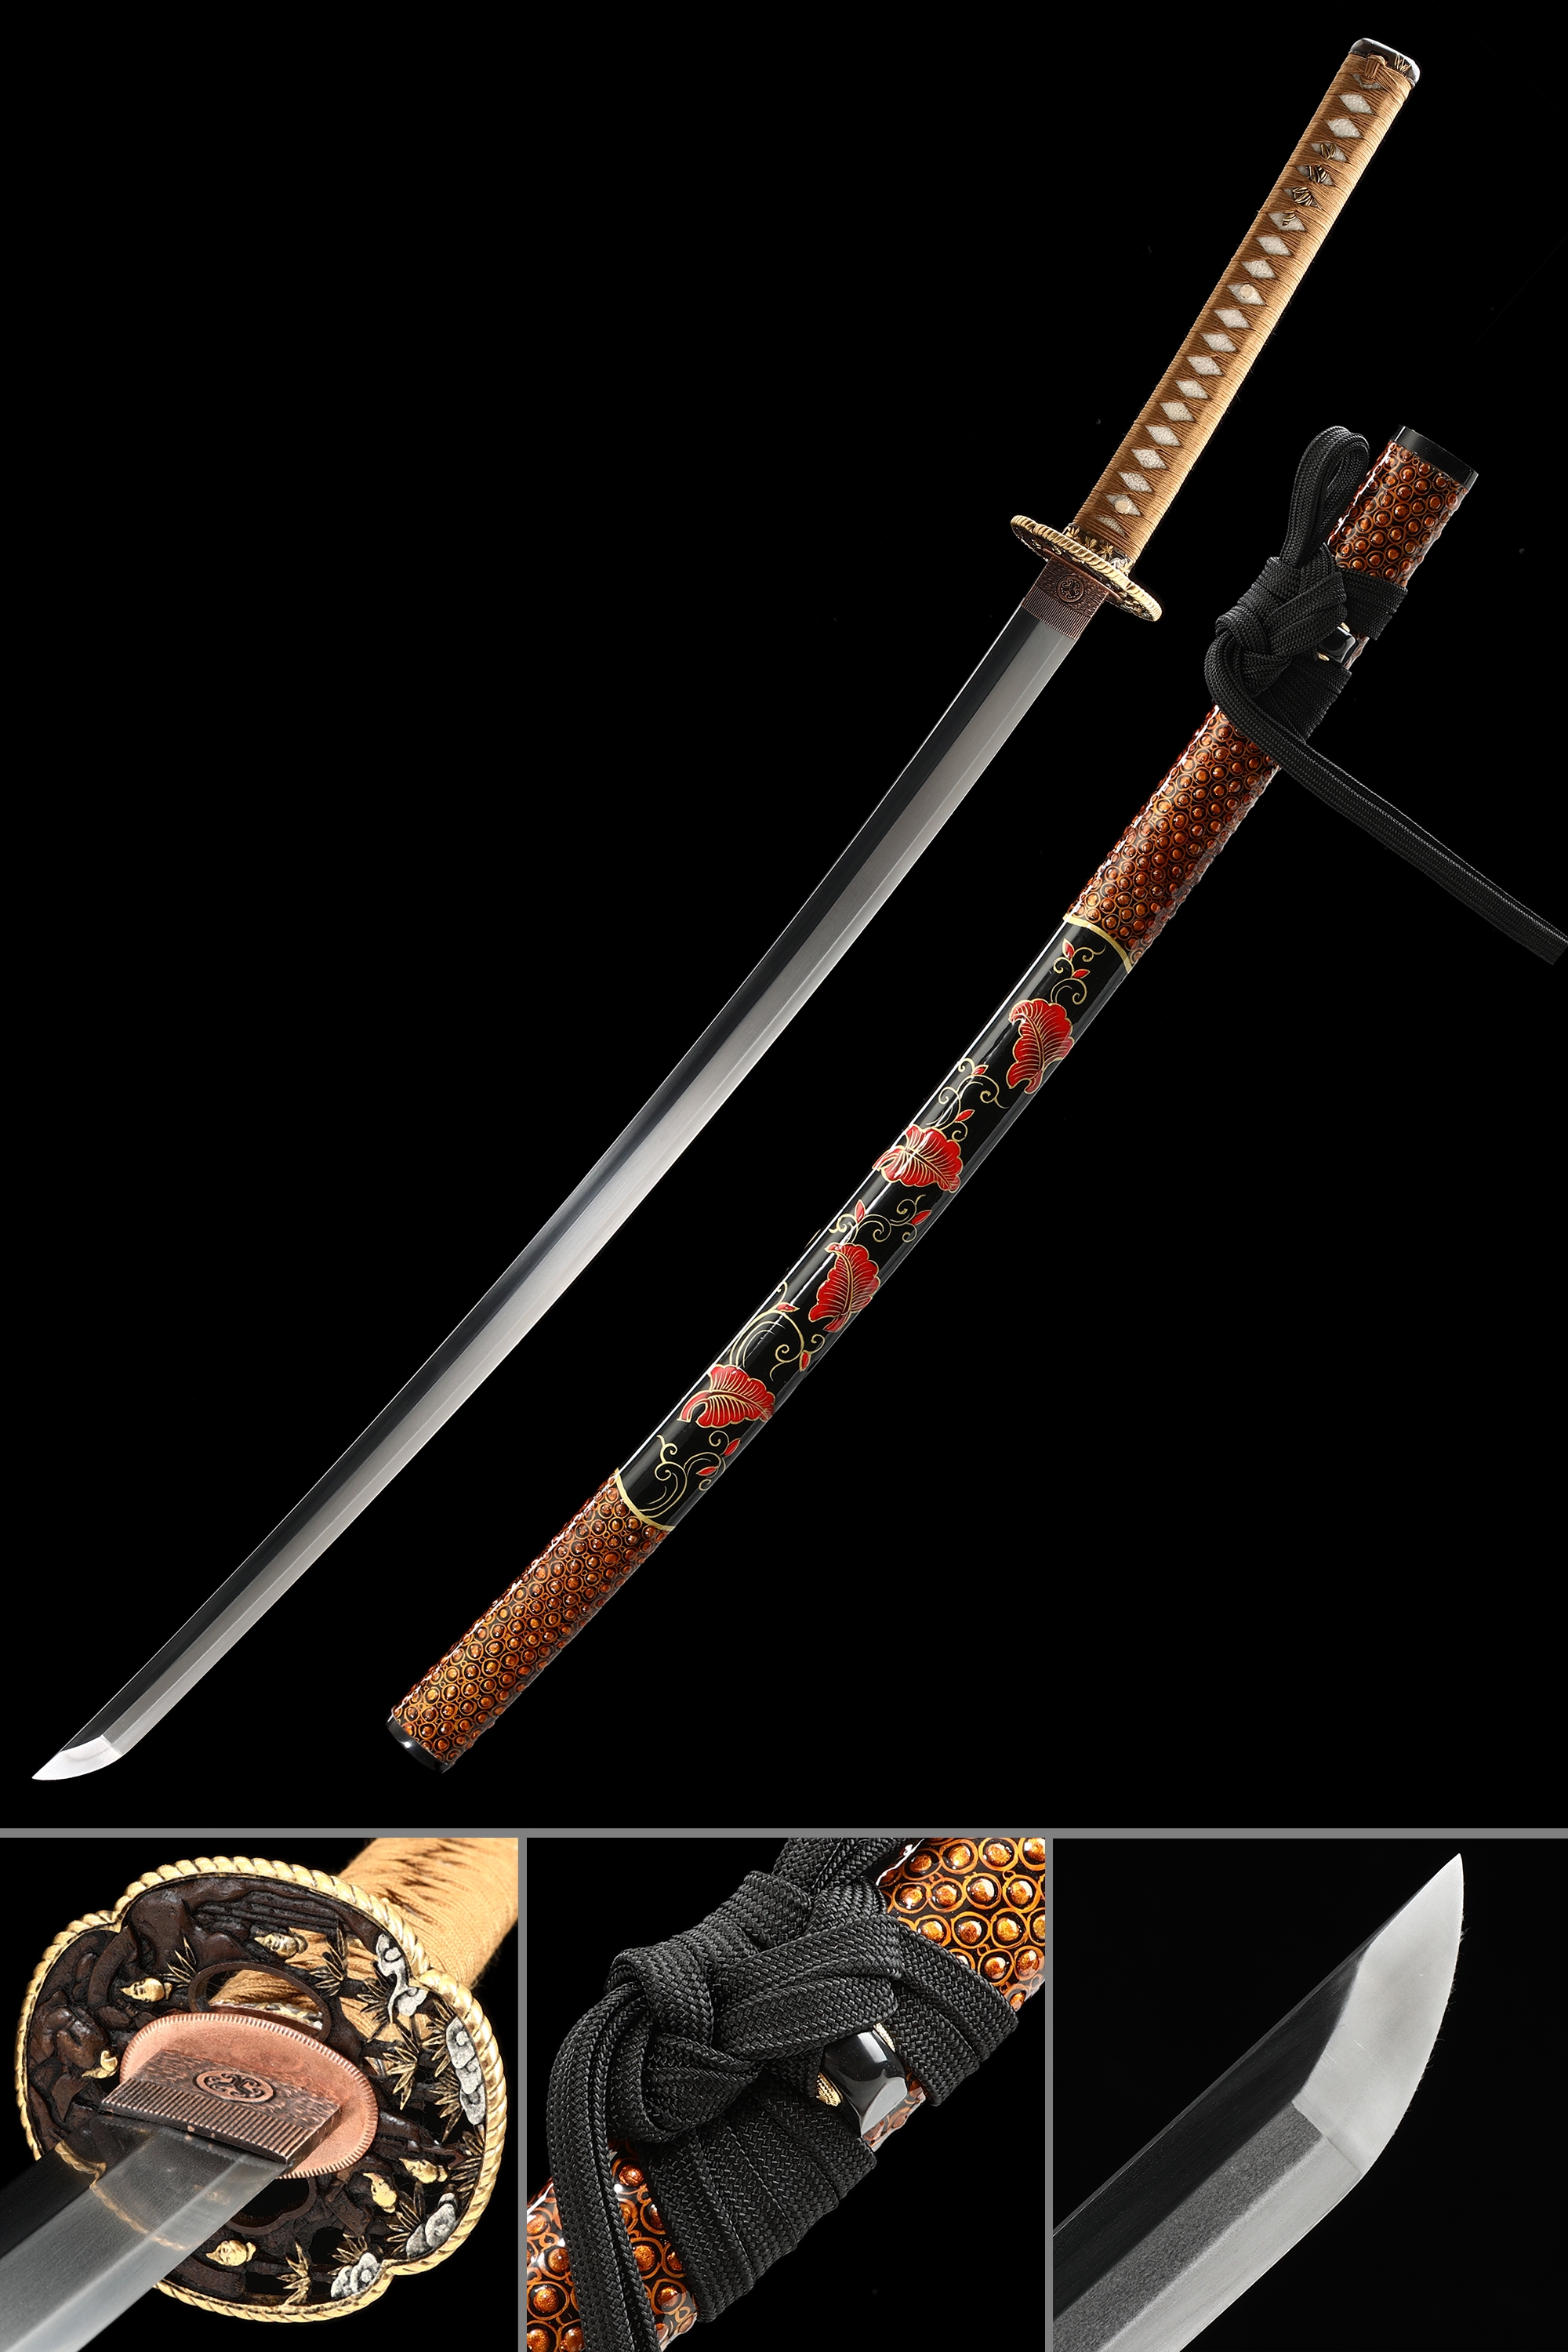 High-performance Handcrafted Katana Sword Tamahagane Steel With Hand-sharpened Blade